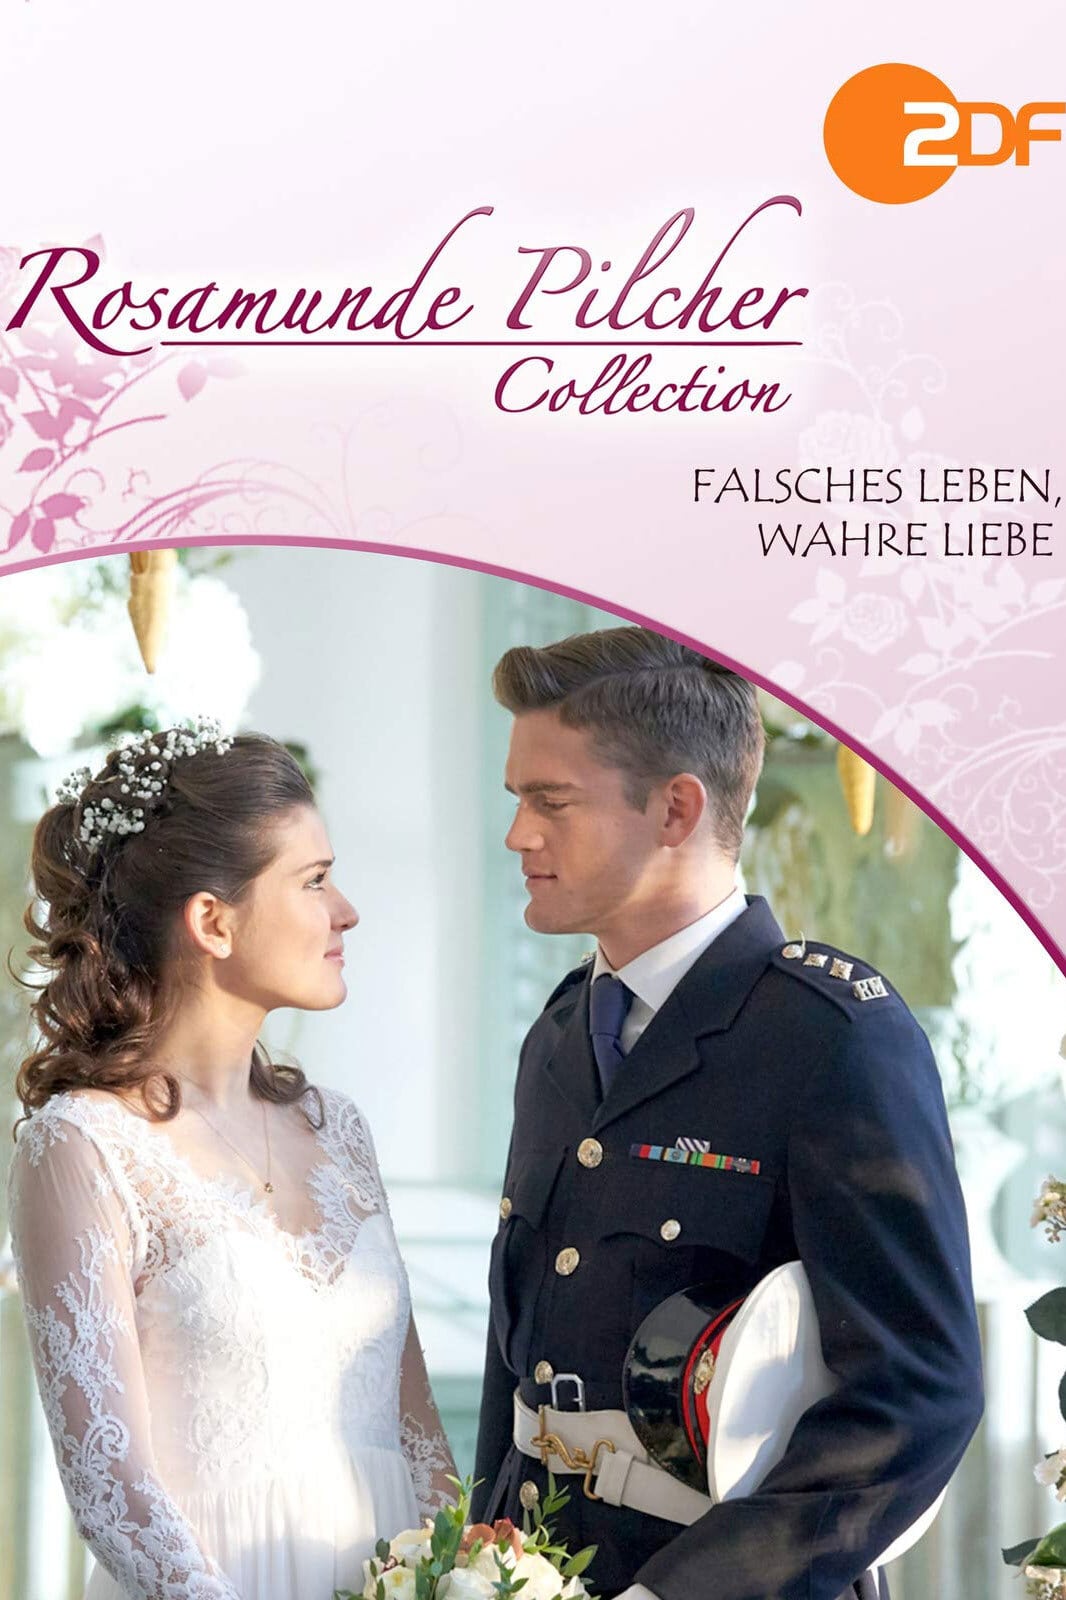 Caratula de Rosamunde Pilcher: Falsches Leben, wahre Liebe (Vida de mentira, amor de verdad) 